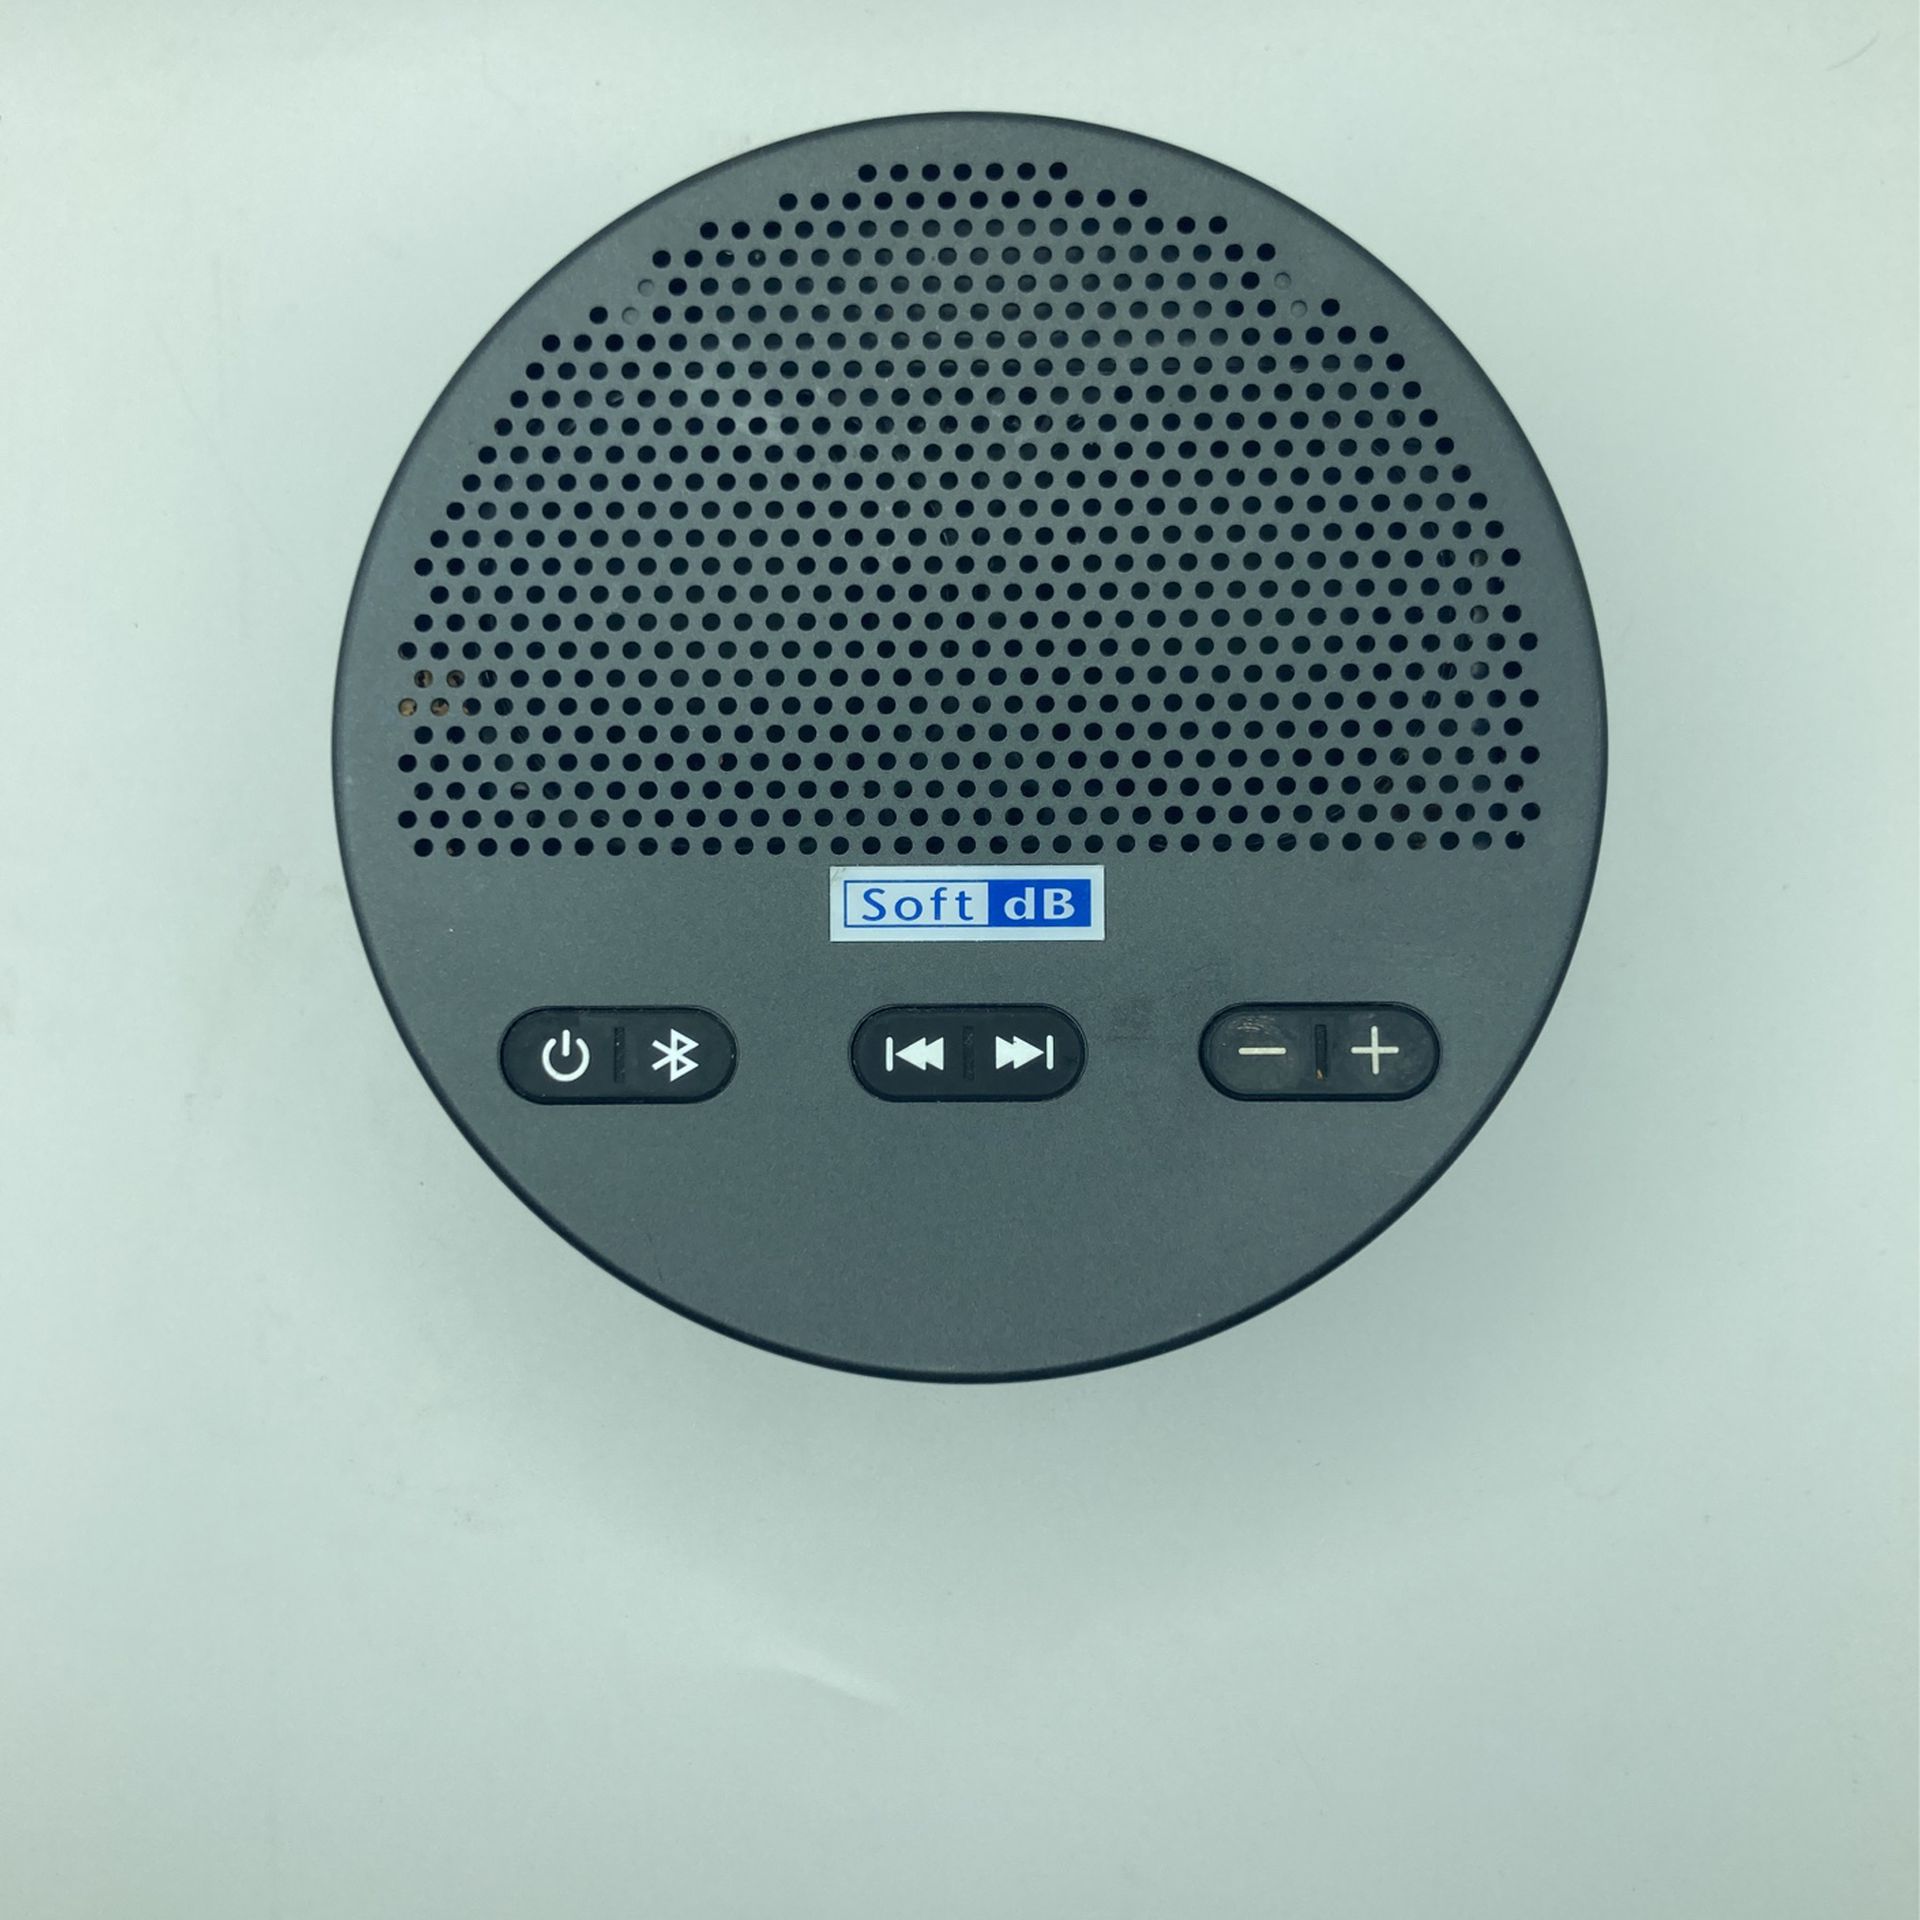 Soft dB Bluetooth Speaker $40